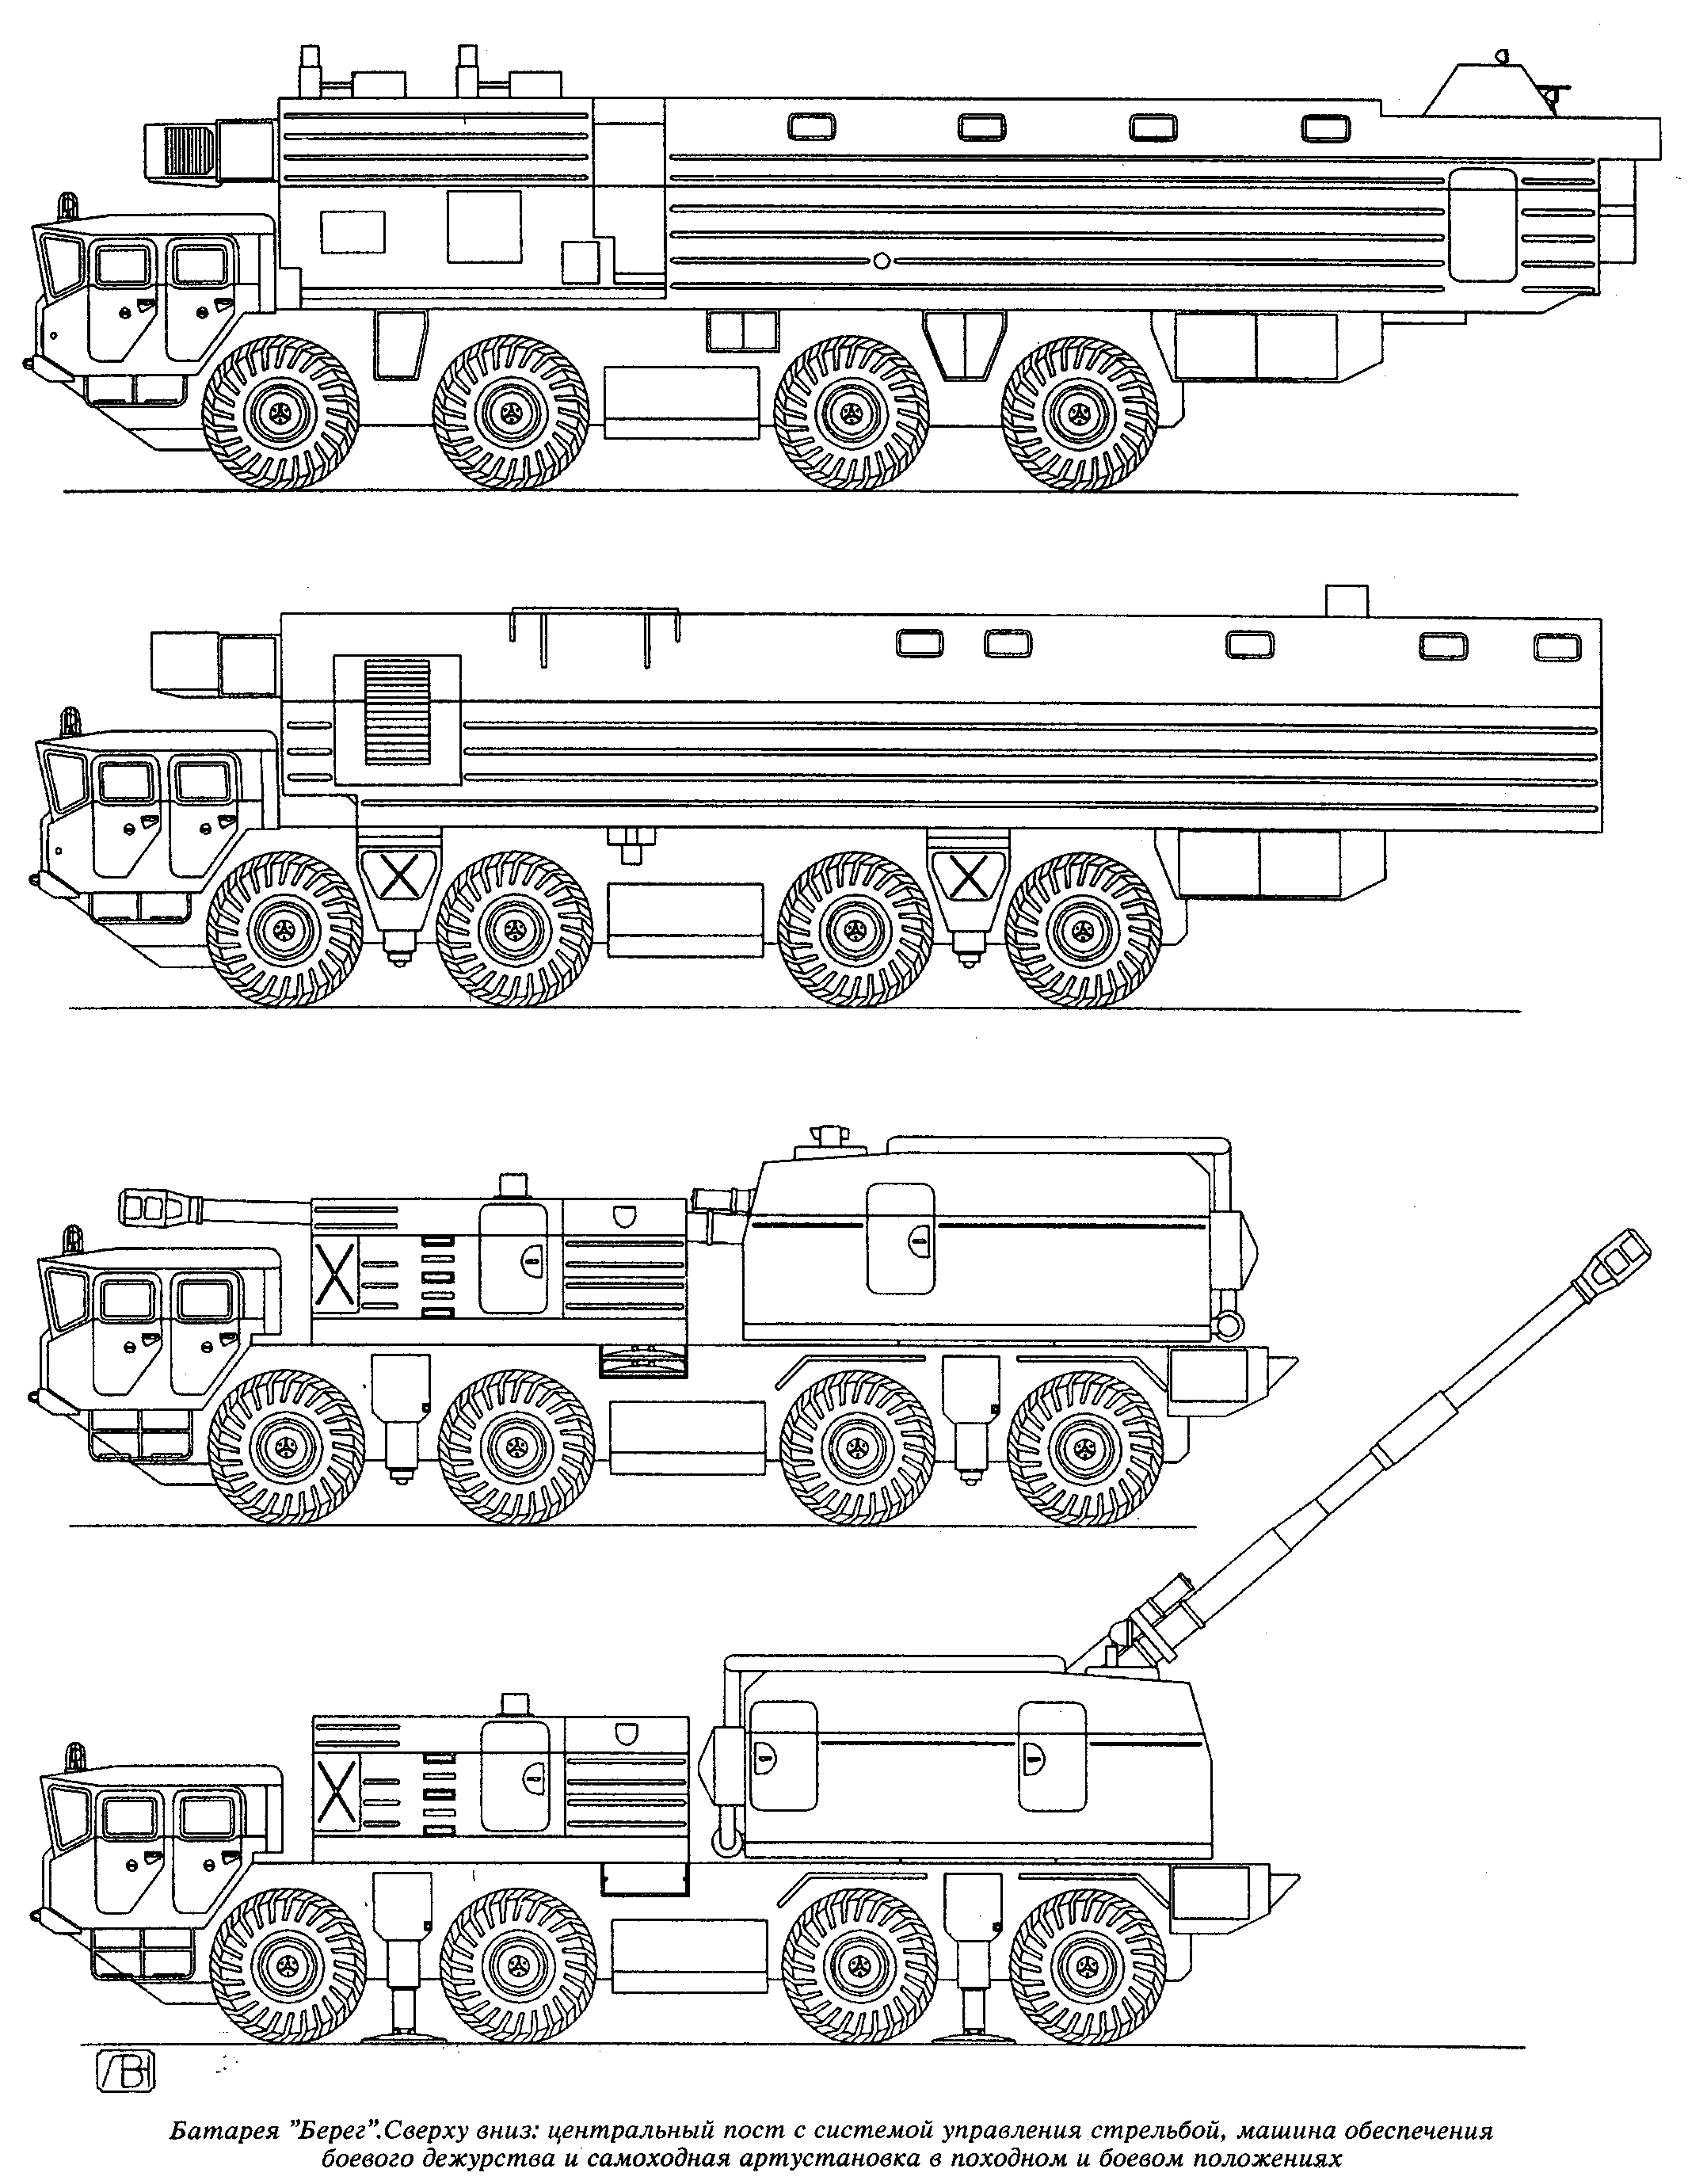 http://armor.kiev.ua/armor/Tanks/Modern/bereg/bereg_2.gif